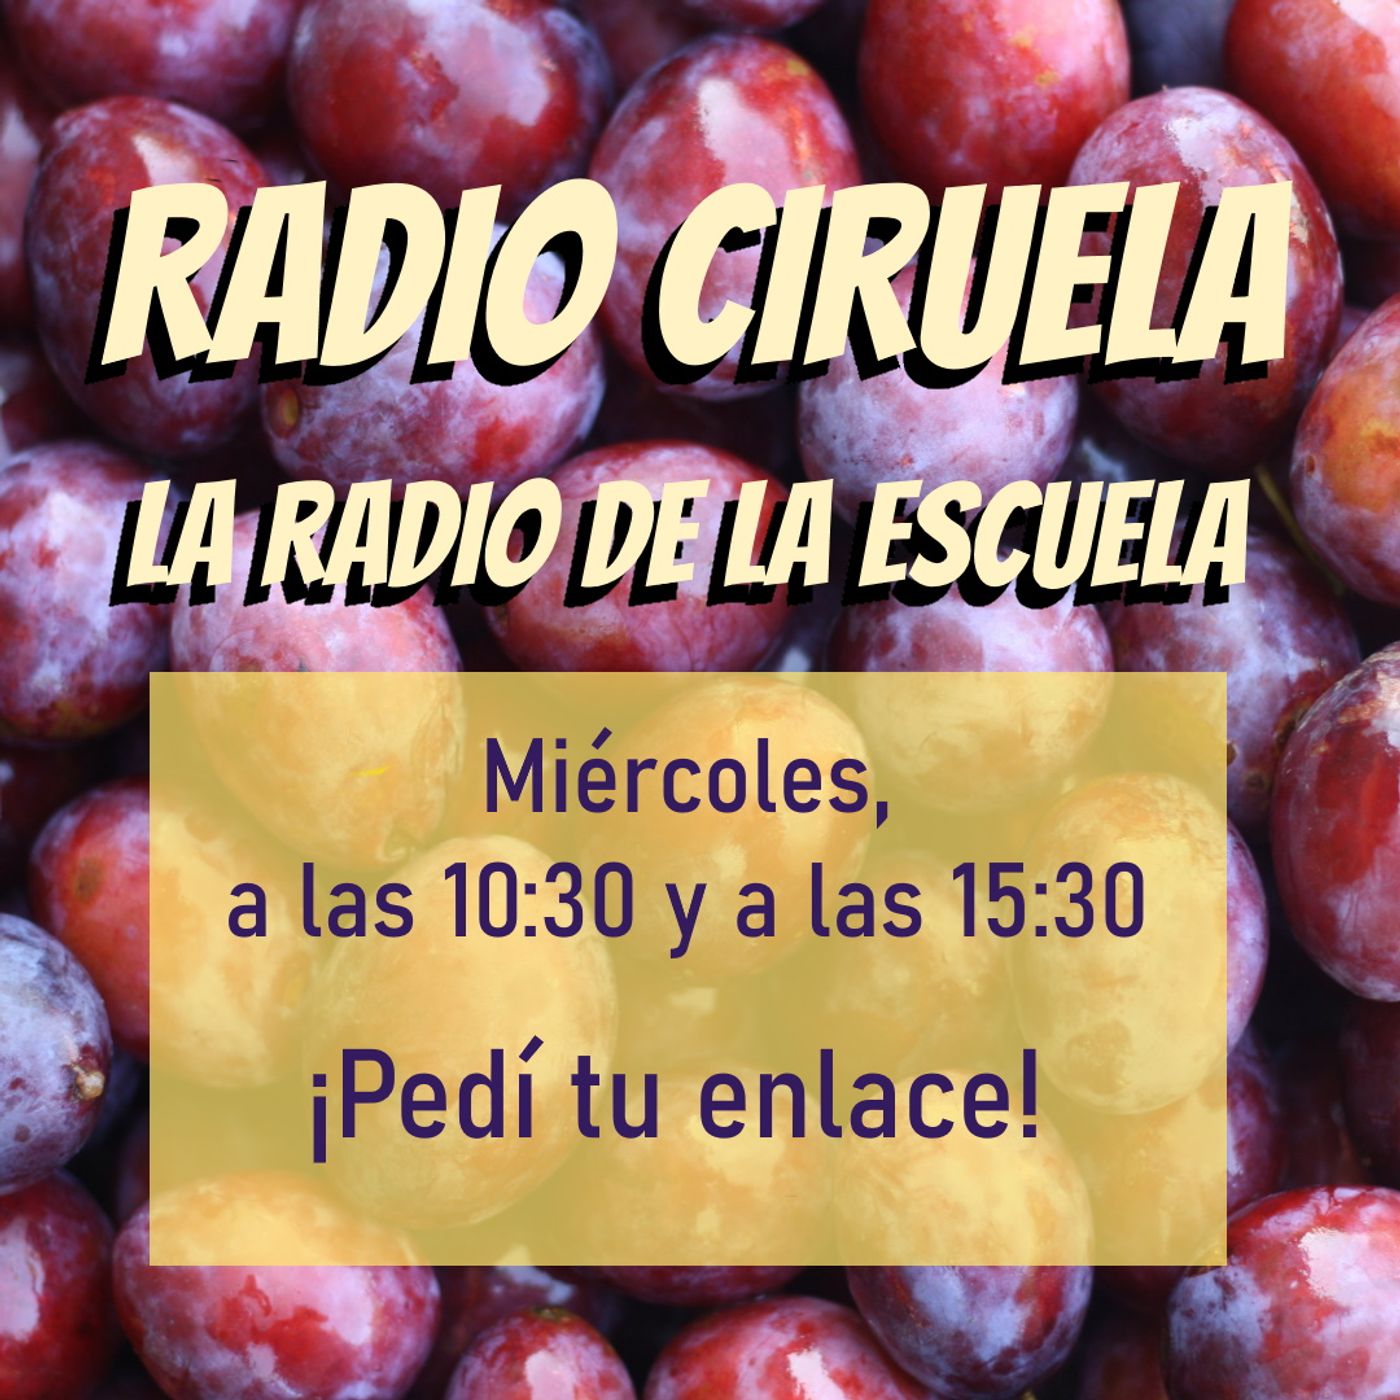 Radio ciruela 286's podcast